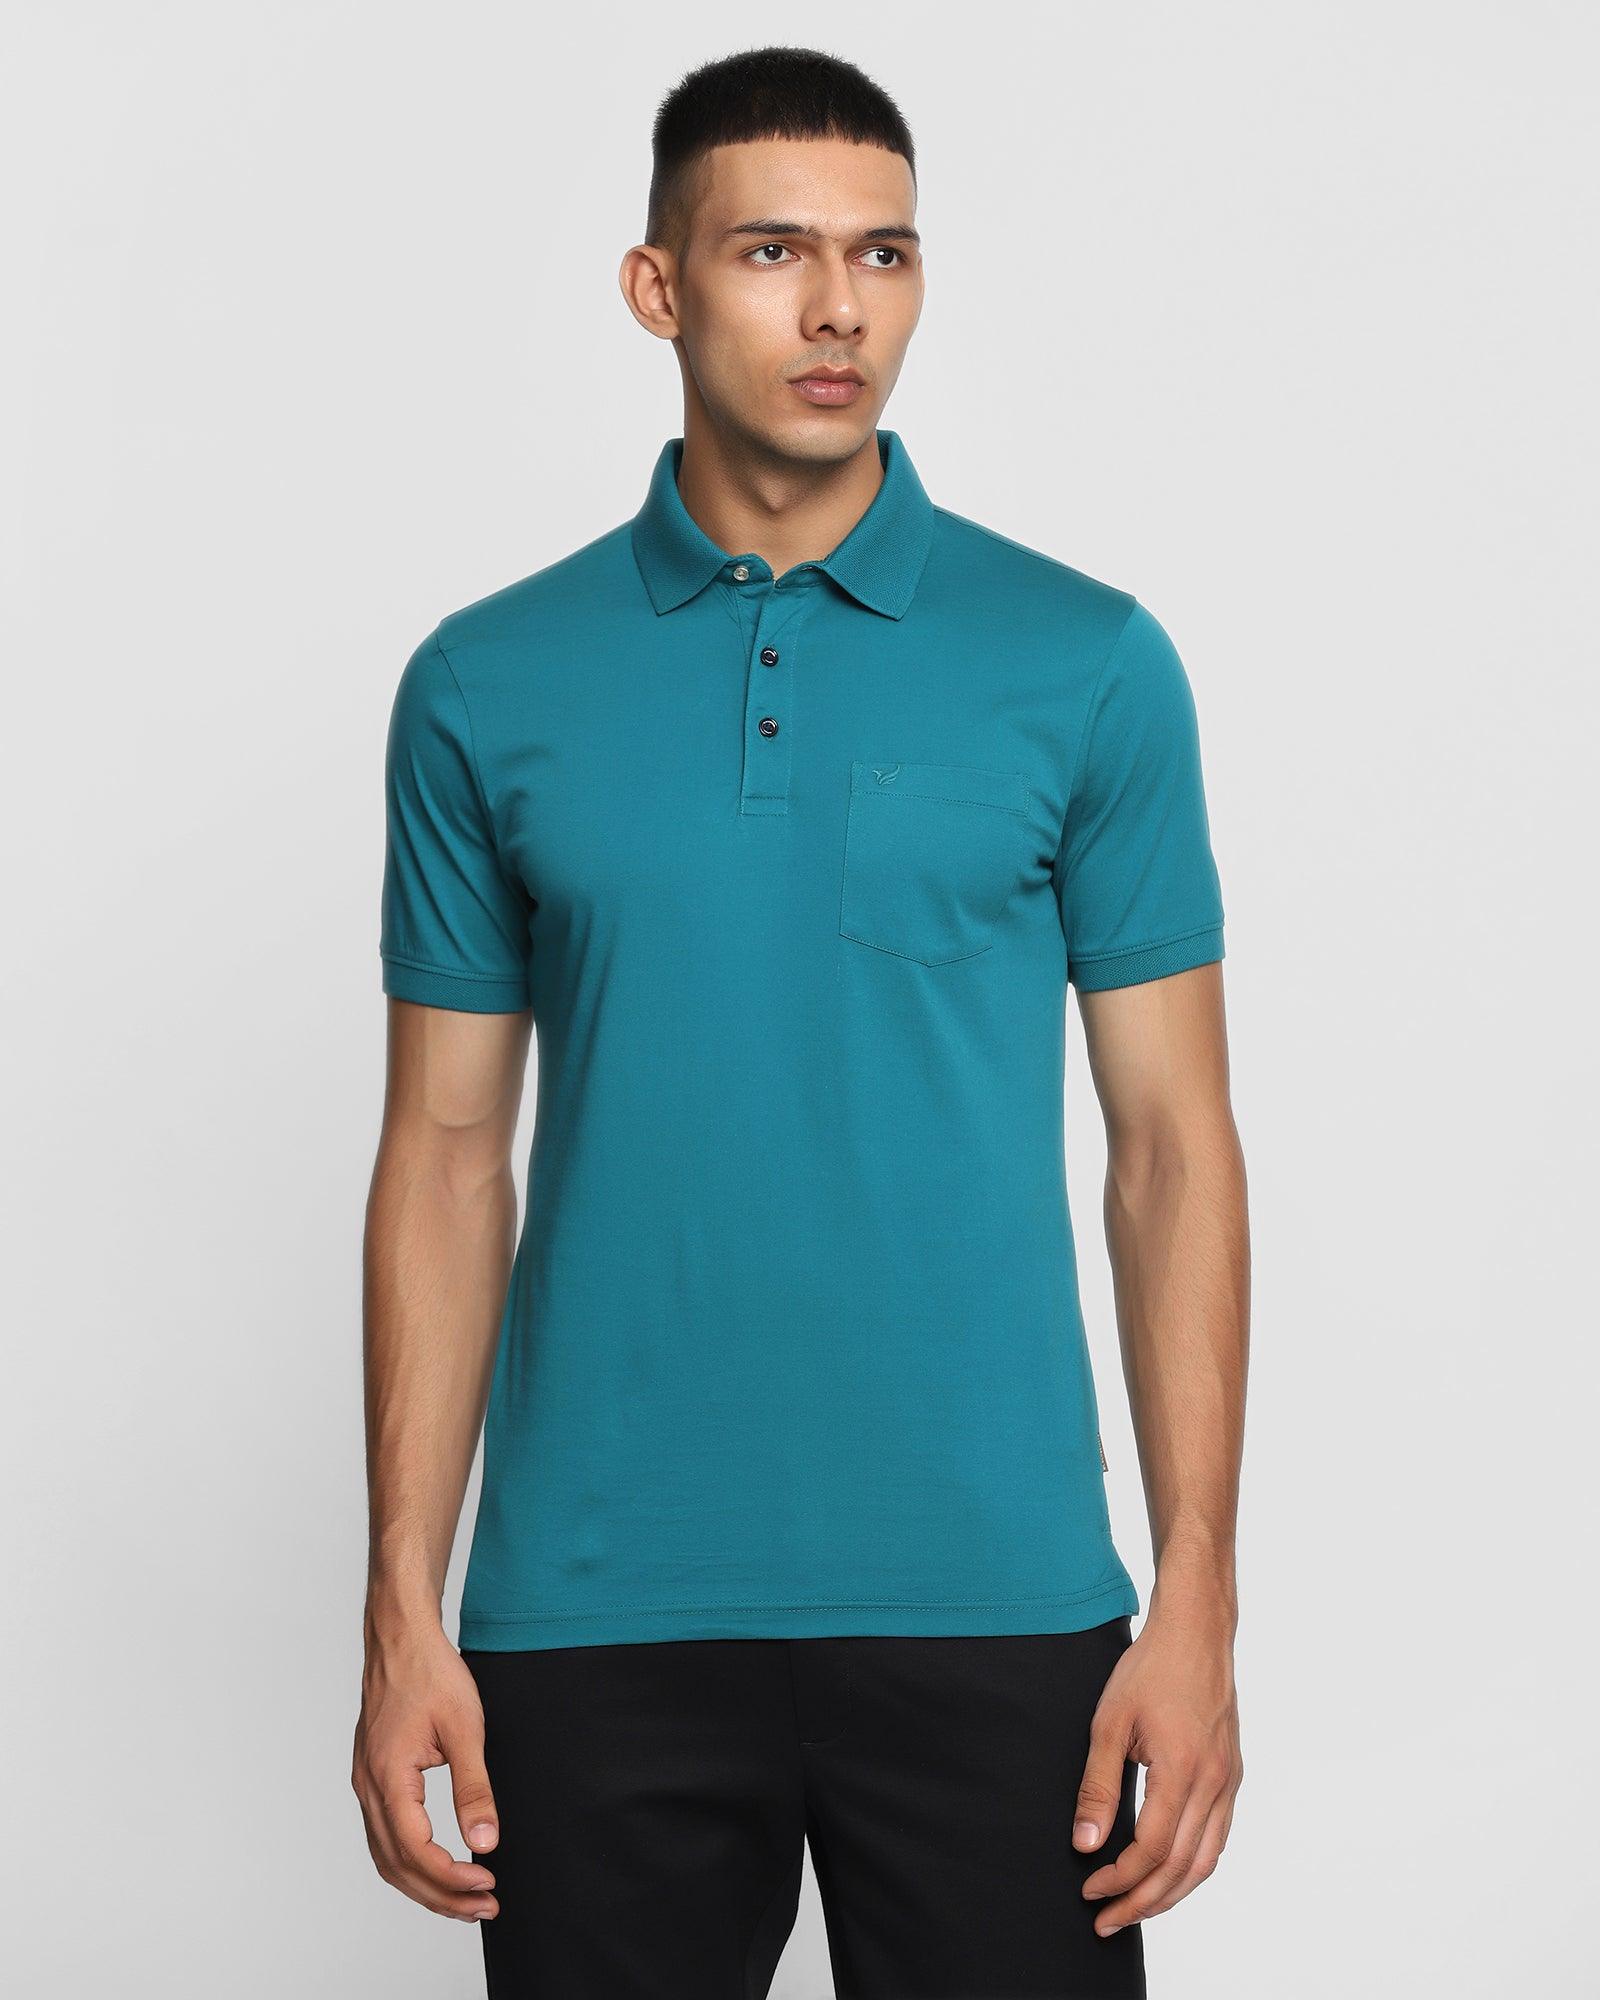 Polo Teal Green Solid T Shirt - David